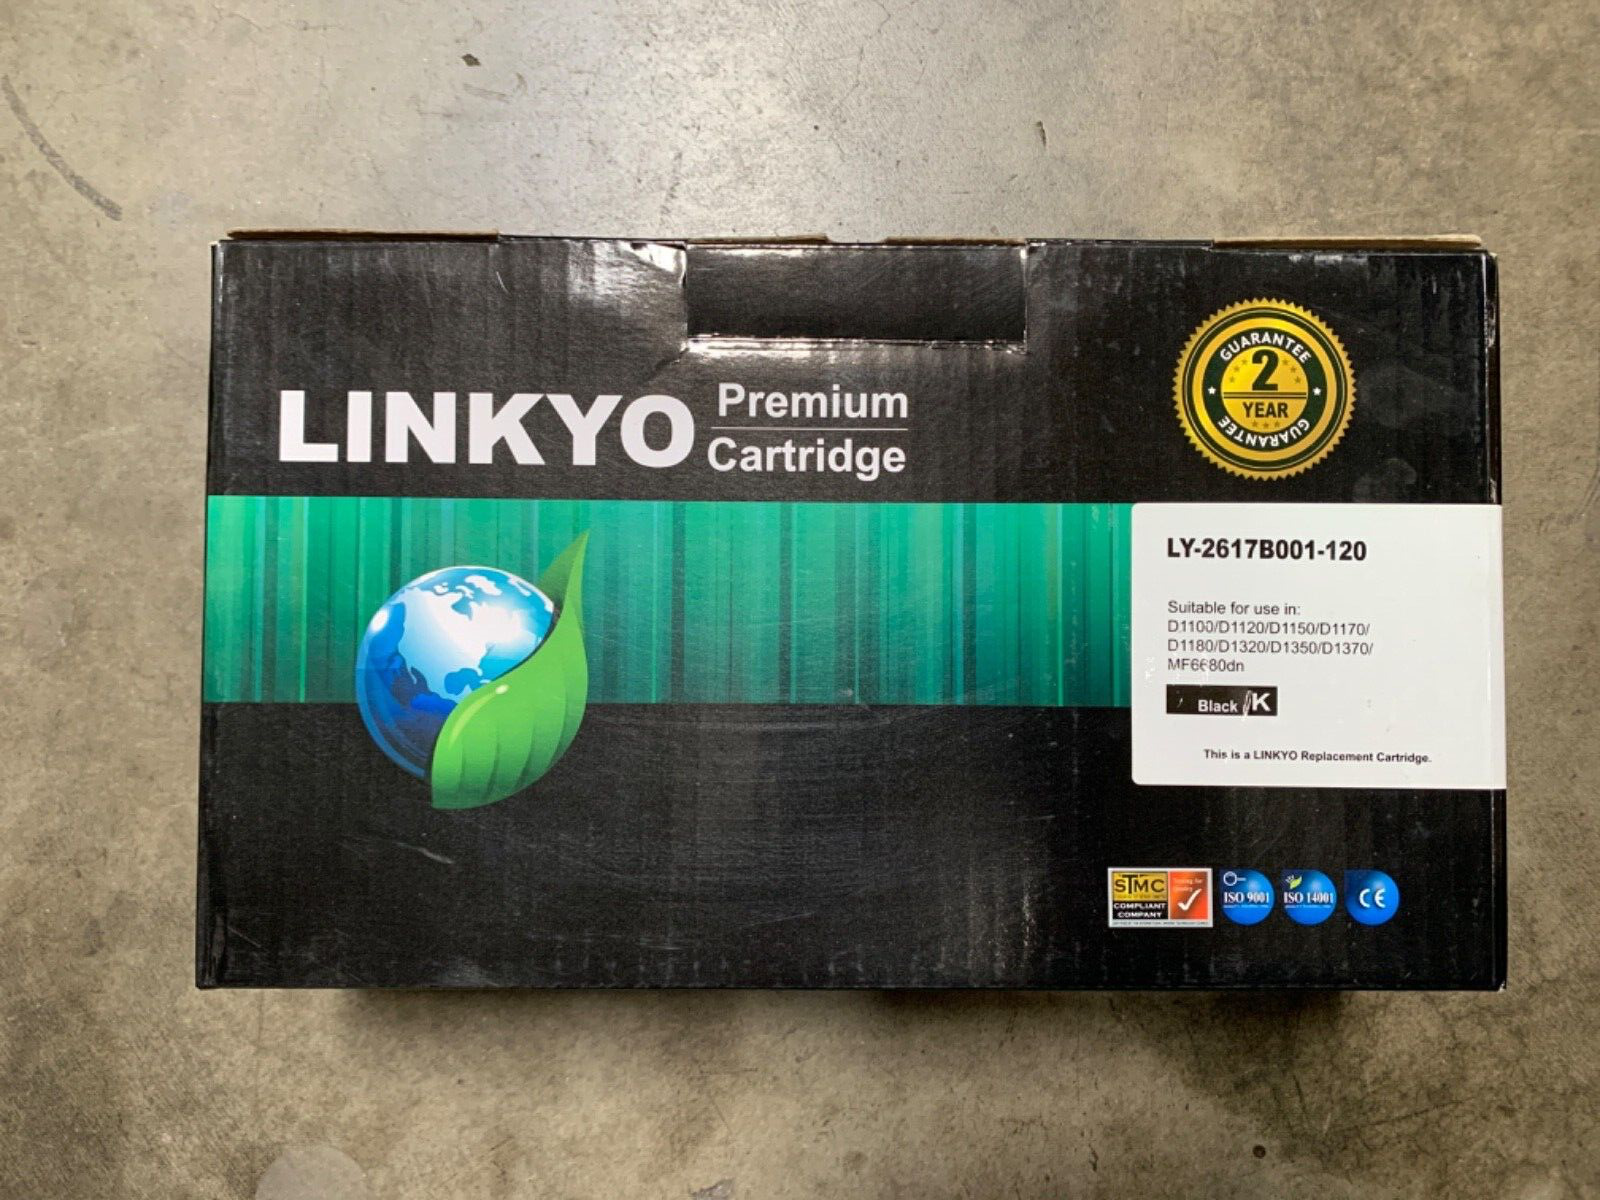 New Linkyo Premium Cartridge Replacement Ink Toner LY-2617B001-120 Black